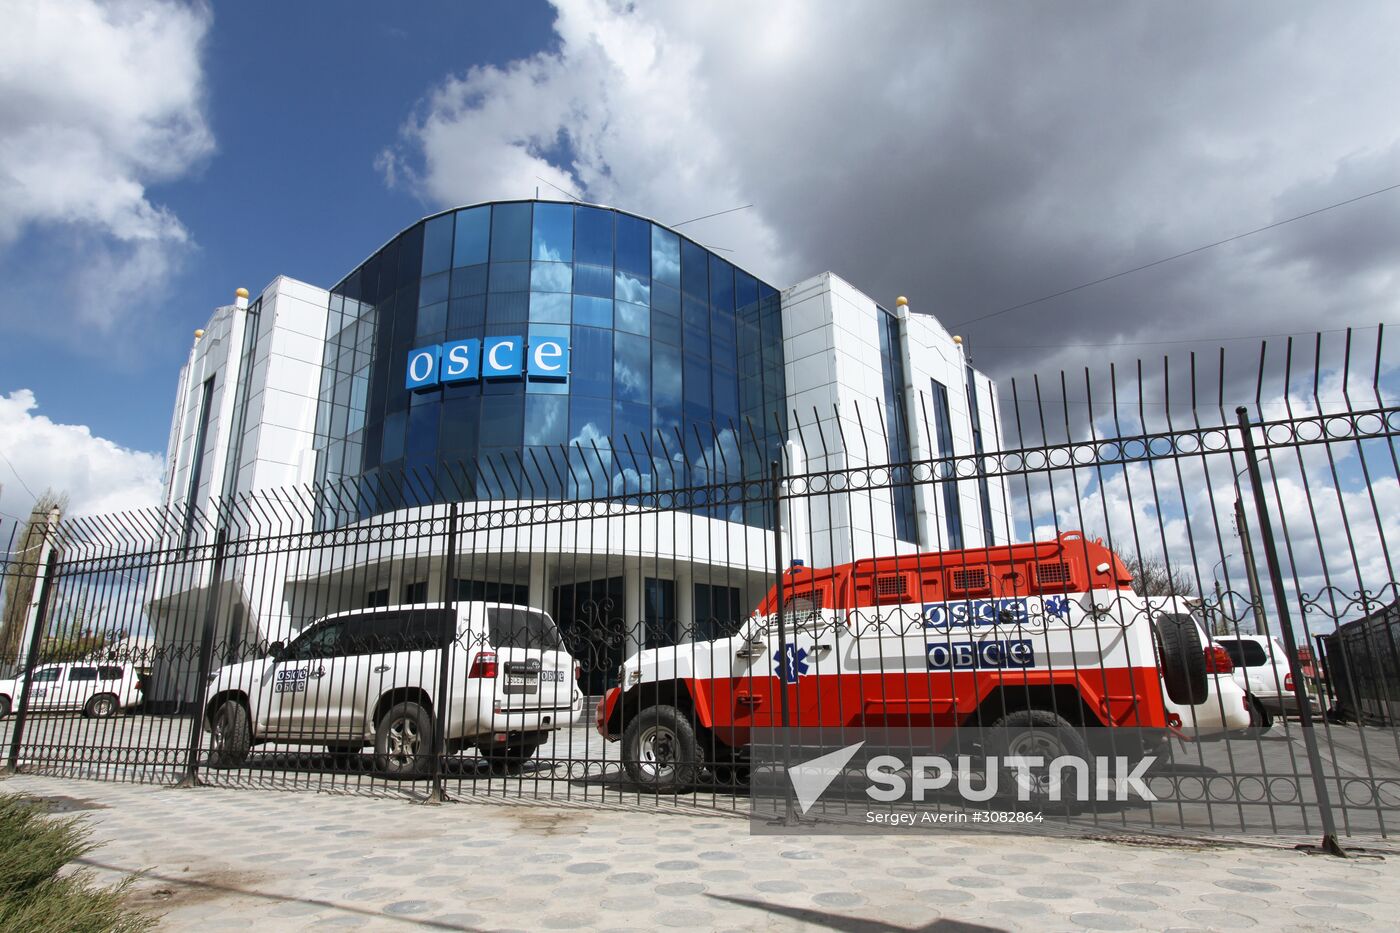 Representatives OSCE Mission to Ukraine visit the OSCE car blast site in Lugansk Region